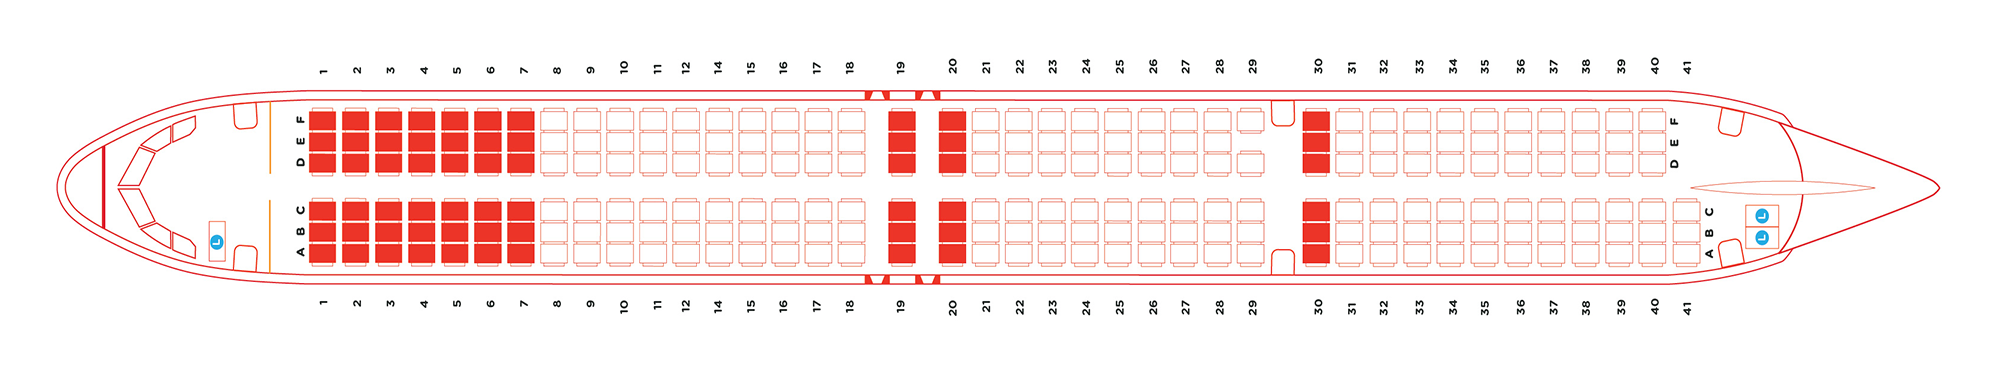 Airasia Flight Seat Options At Affordable Rates Airasia